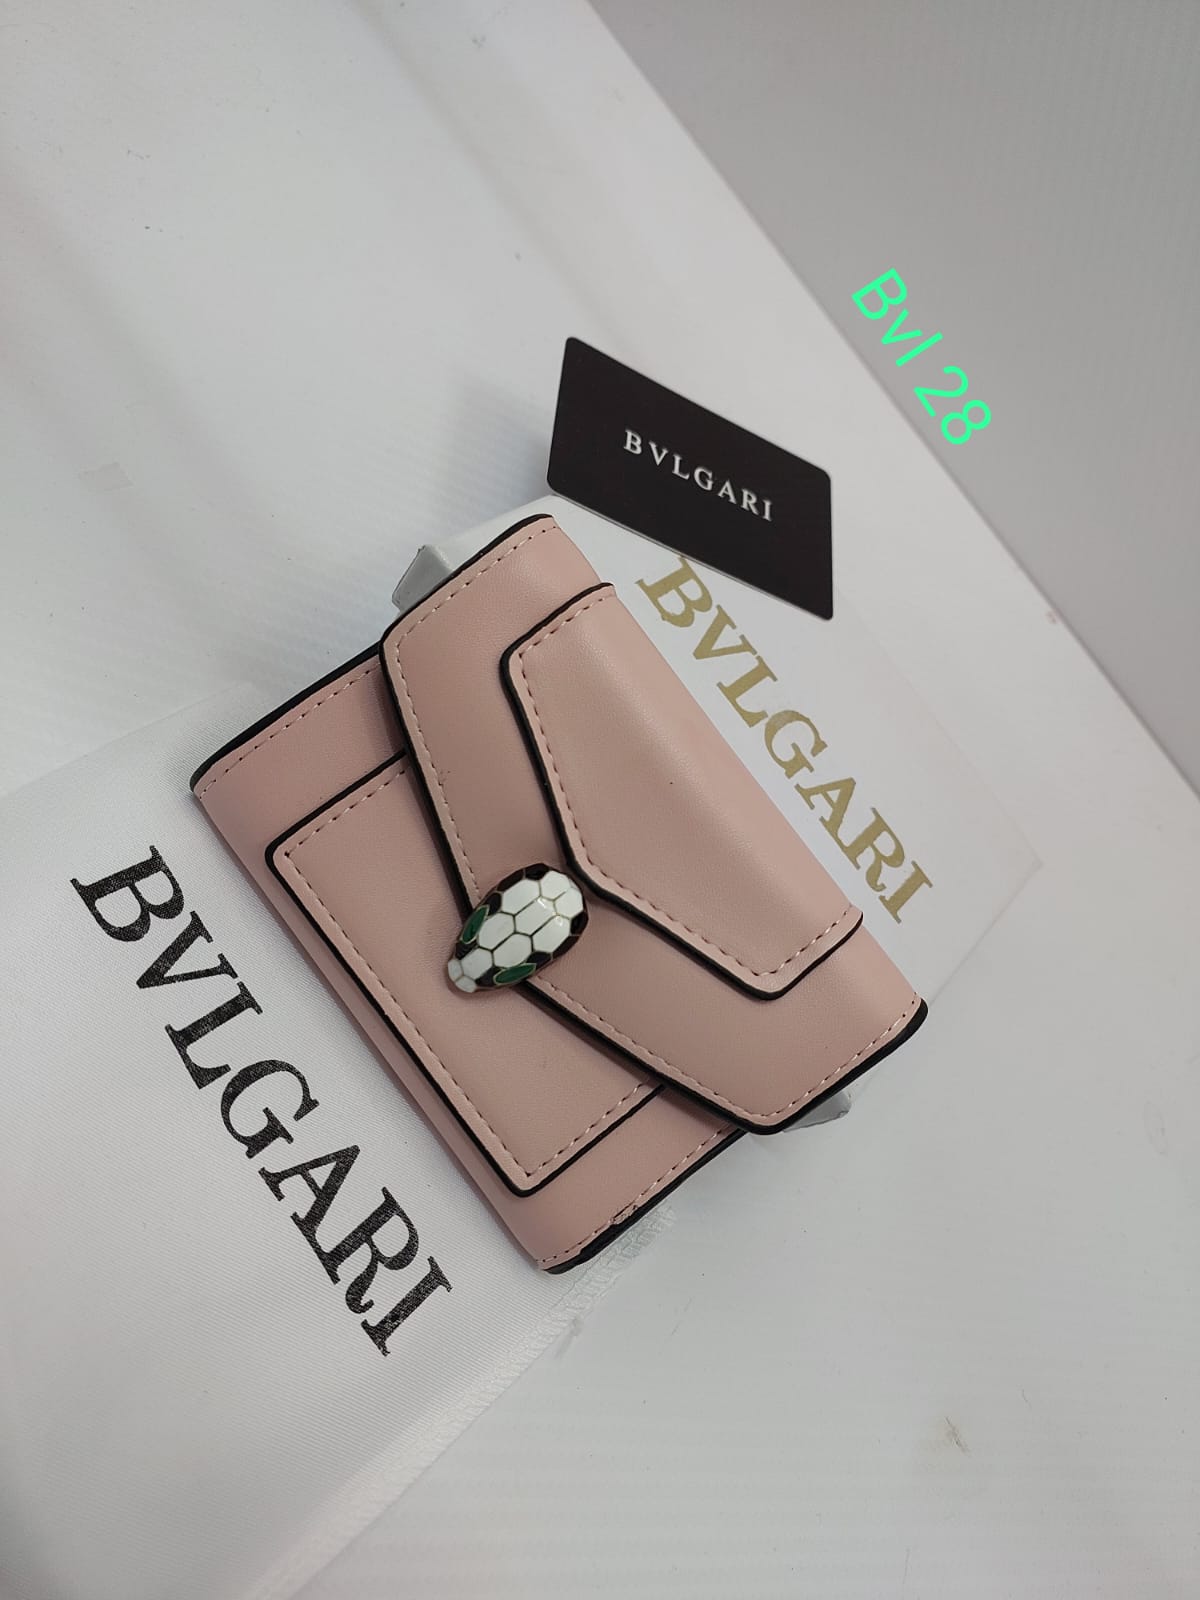 Bvlgari wallet (Box + Packaging)